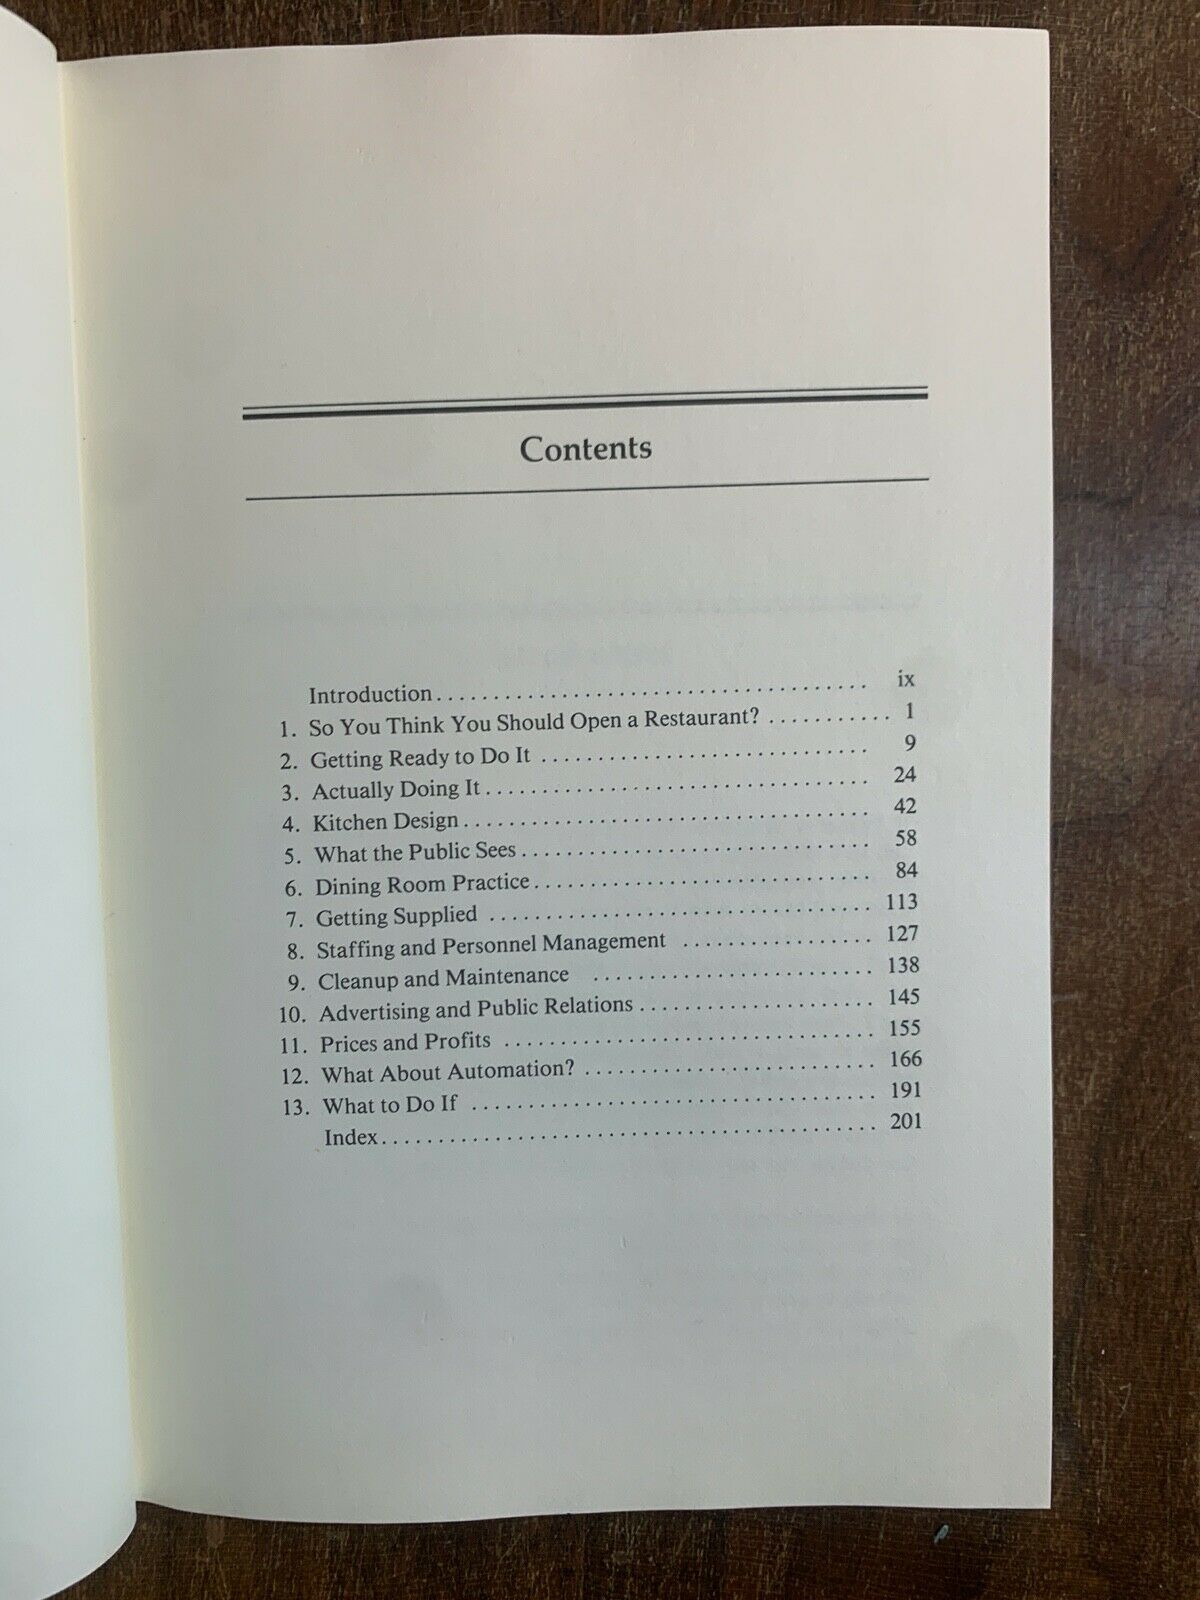 Starting A Small Restaurant, Daniel Miller, (1983) Revised Edition, 3B